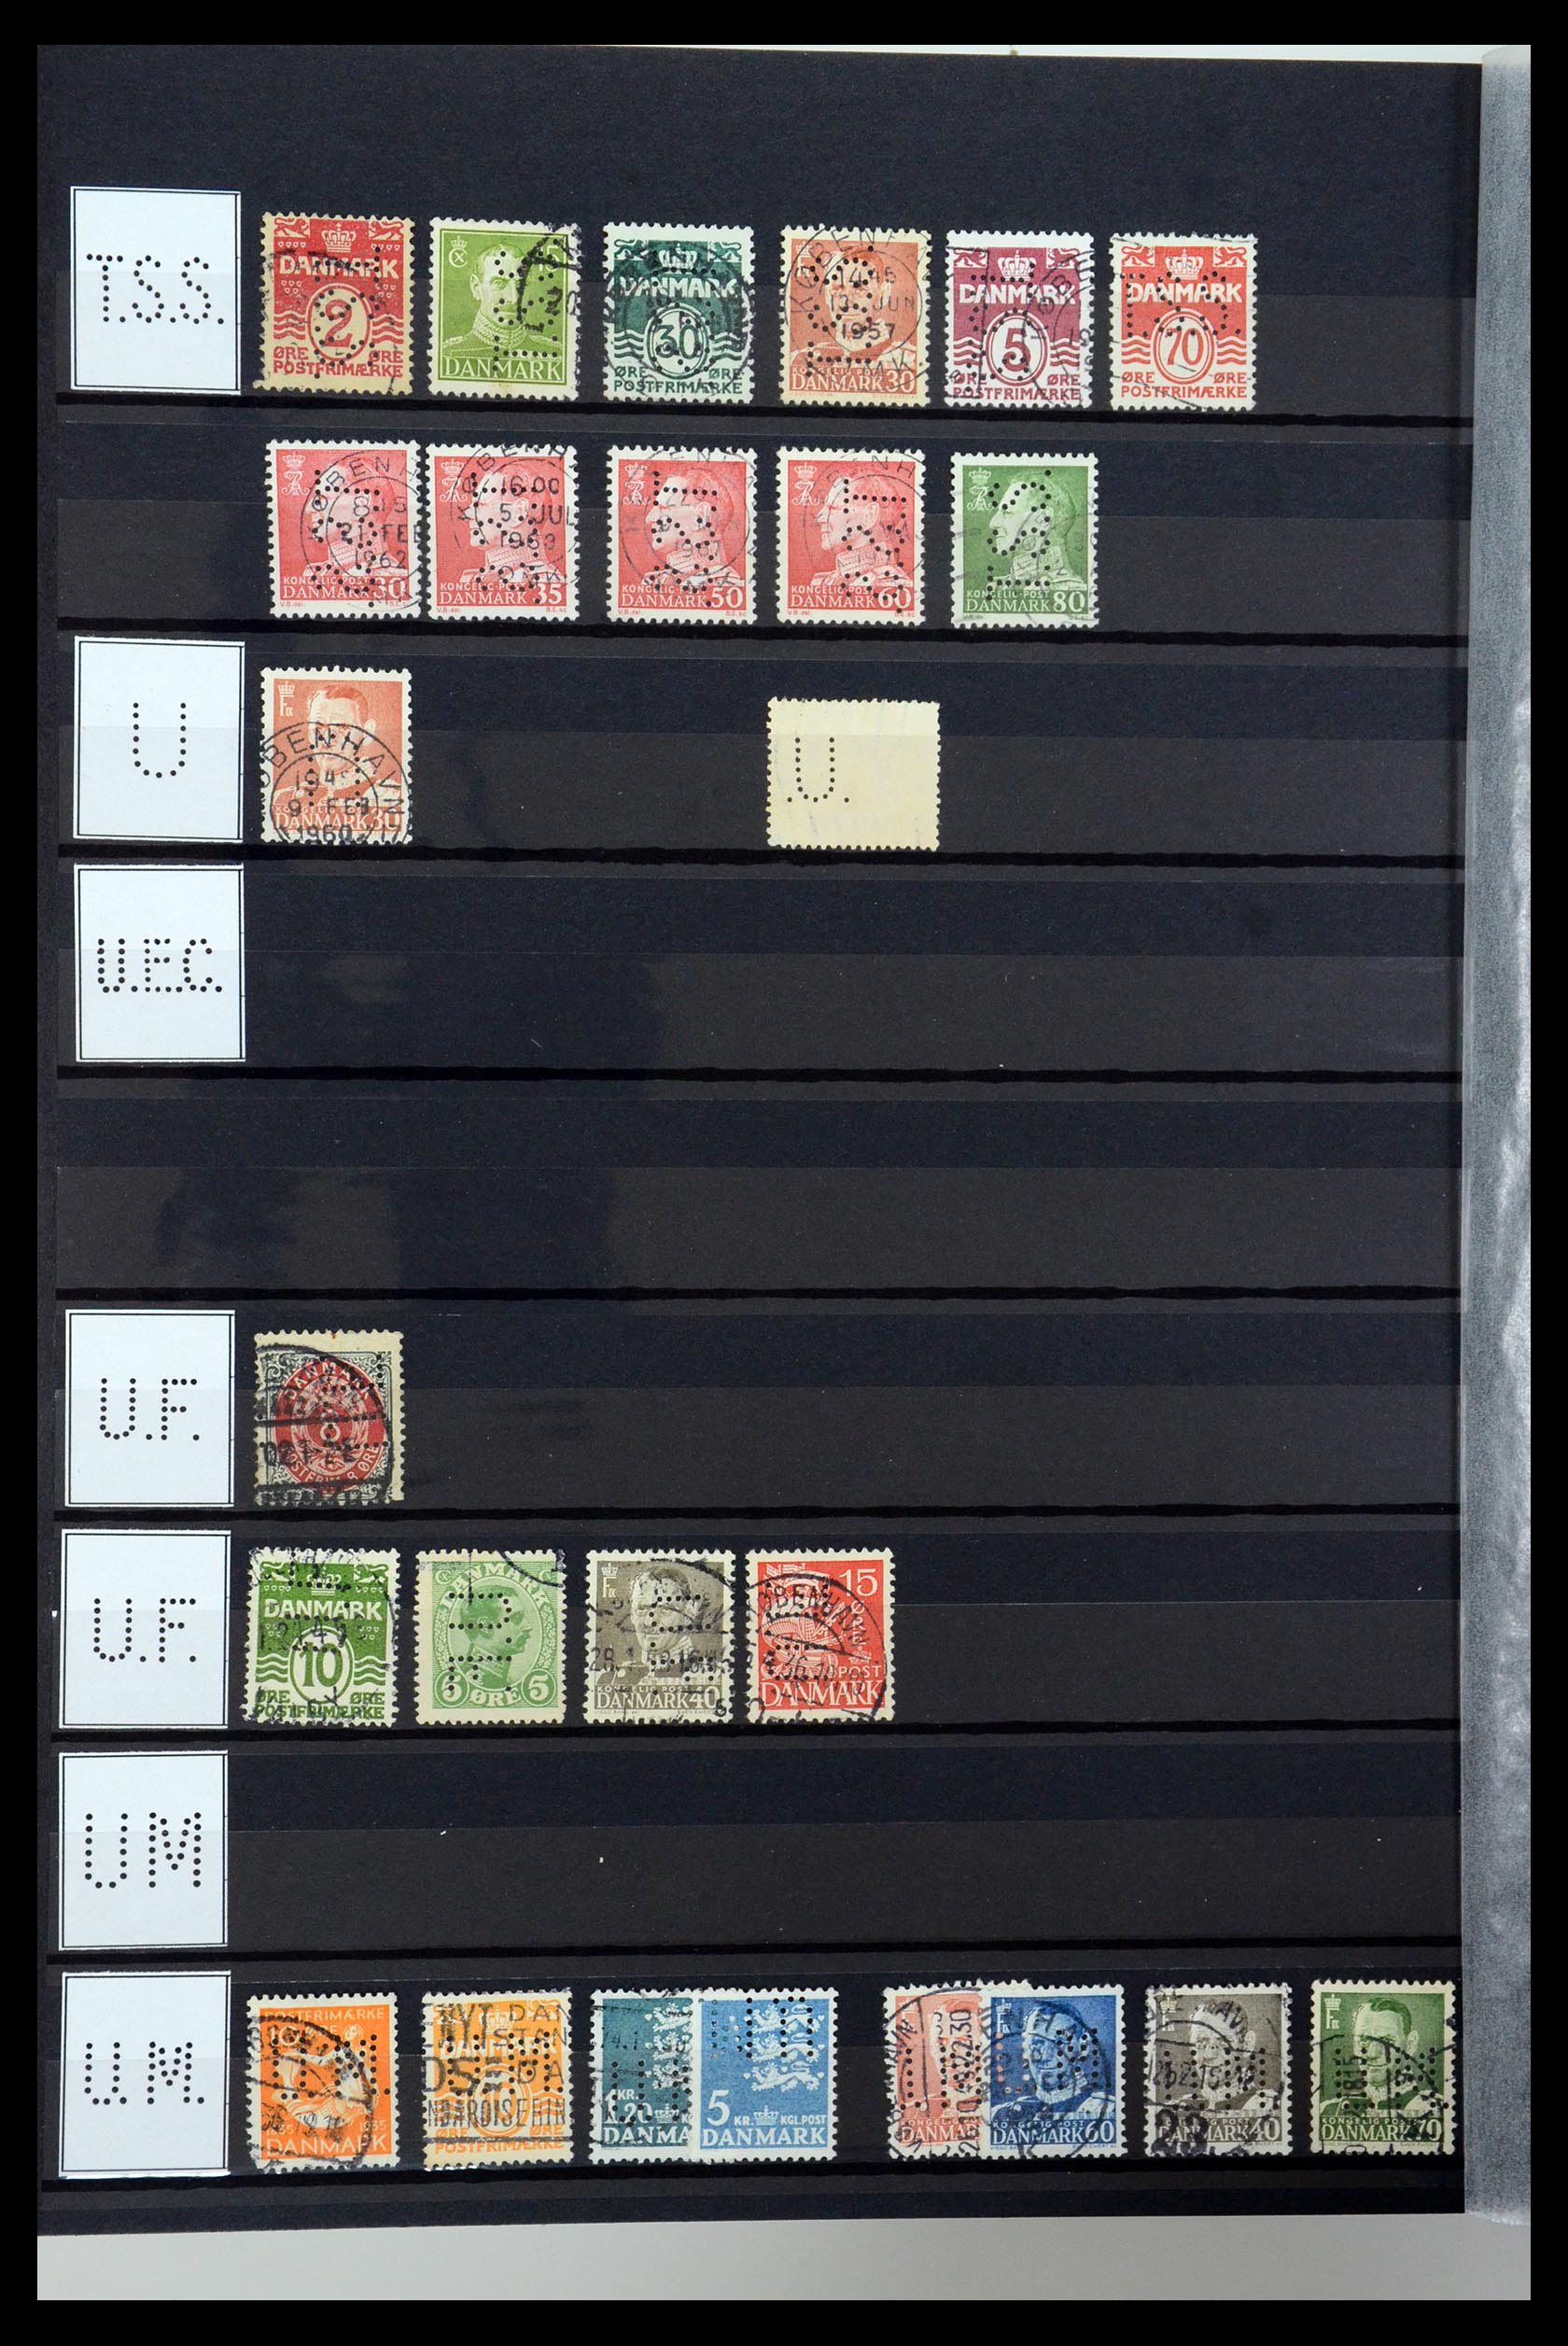 36396 218 - Stamp collection 36396 Denmark perfins.